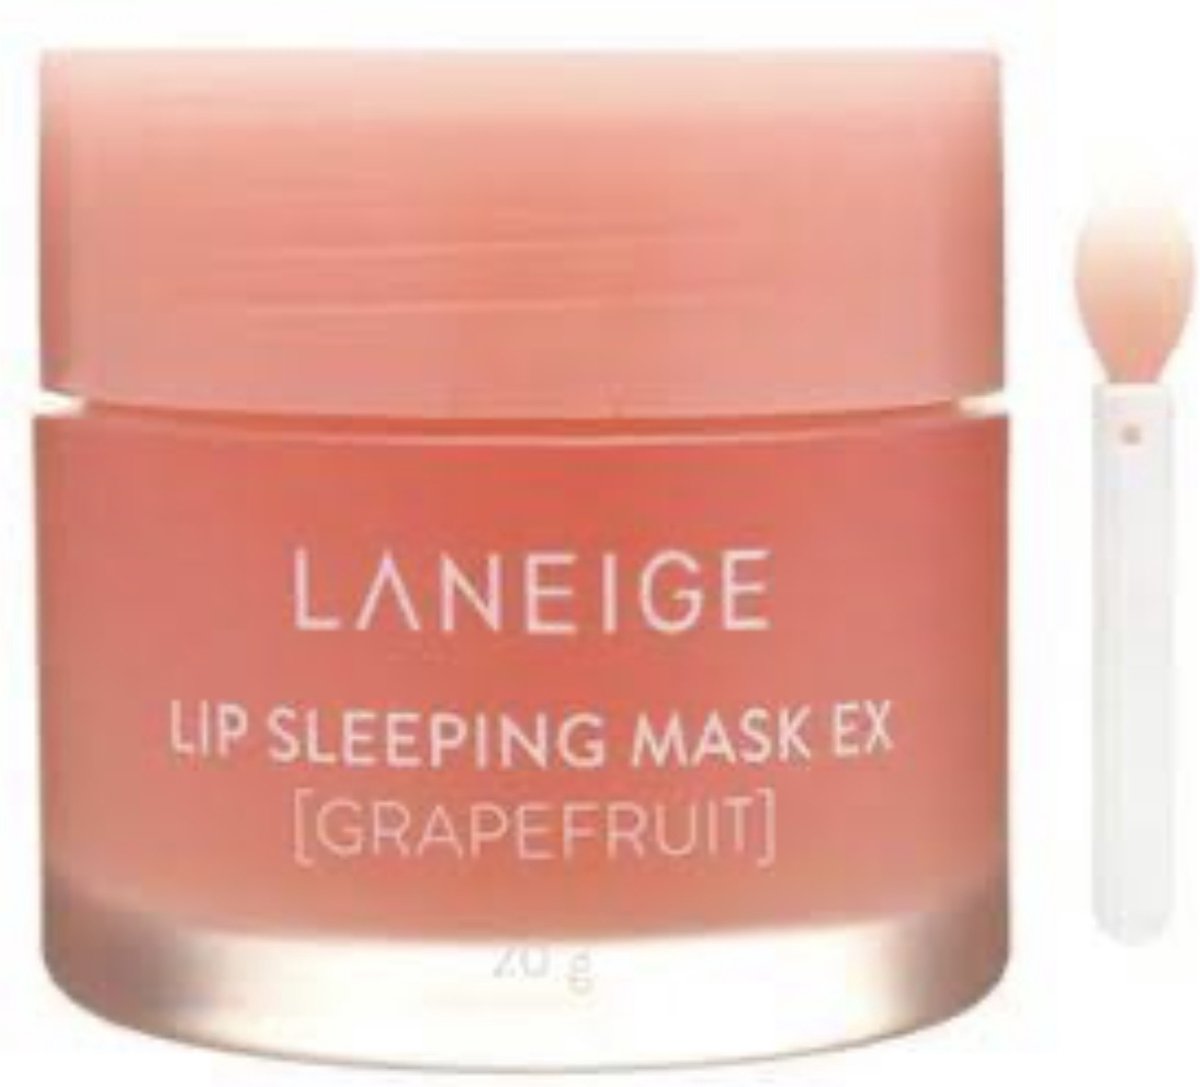 Laneige Lip Sleeping Mask - EX Grapefruit